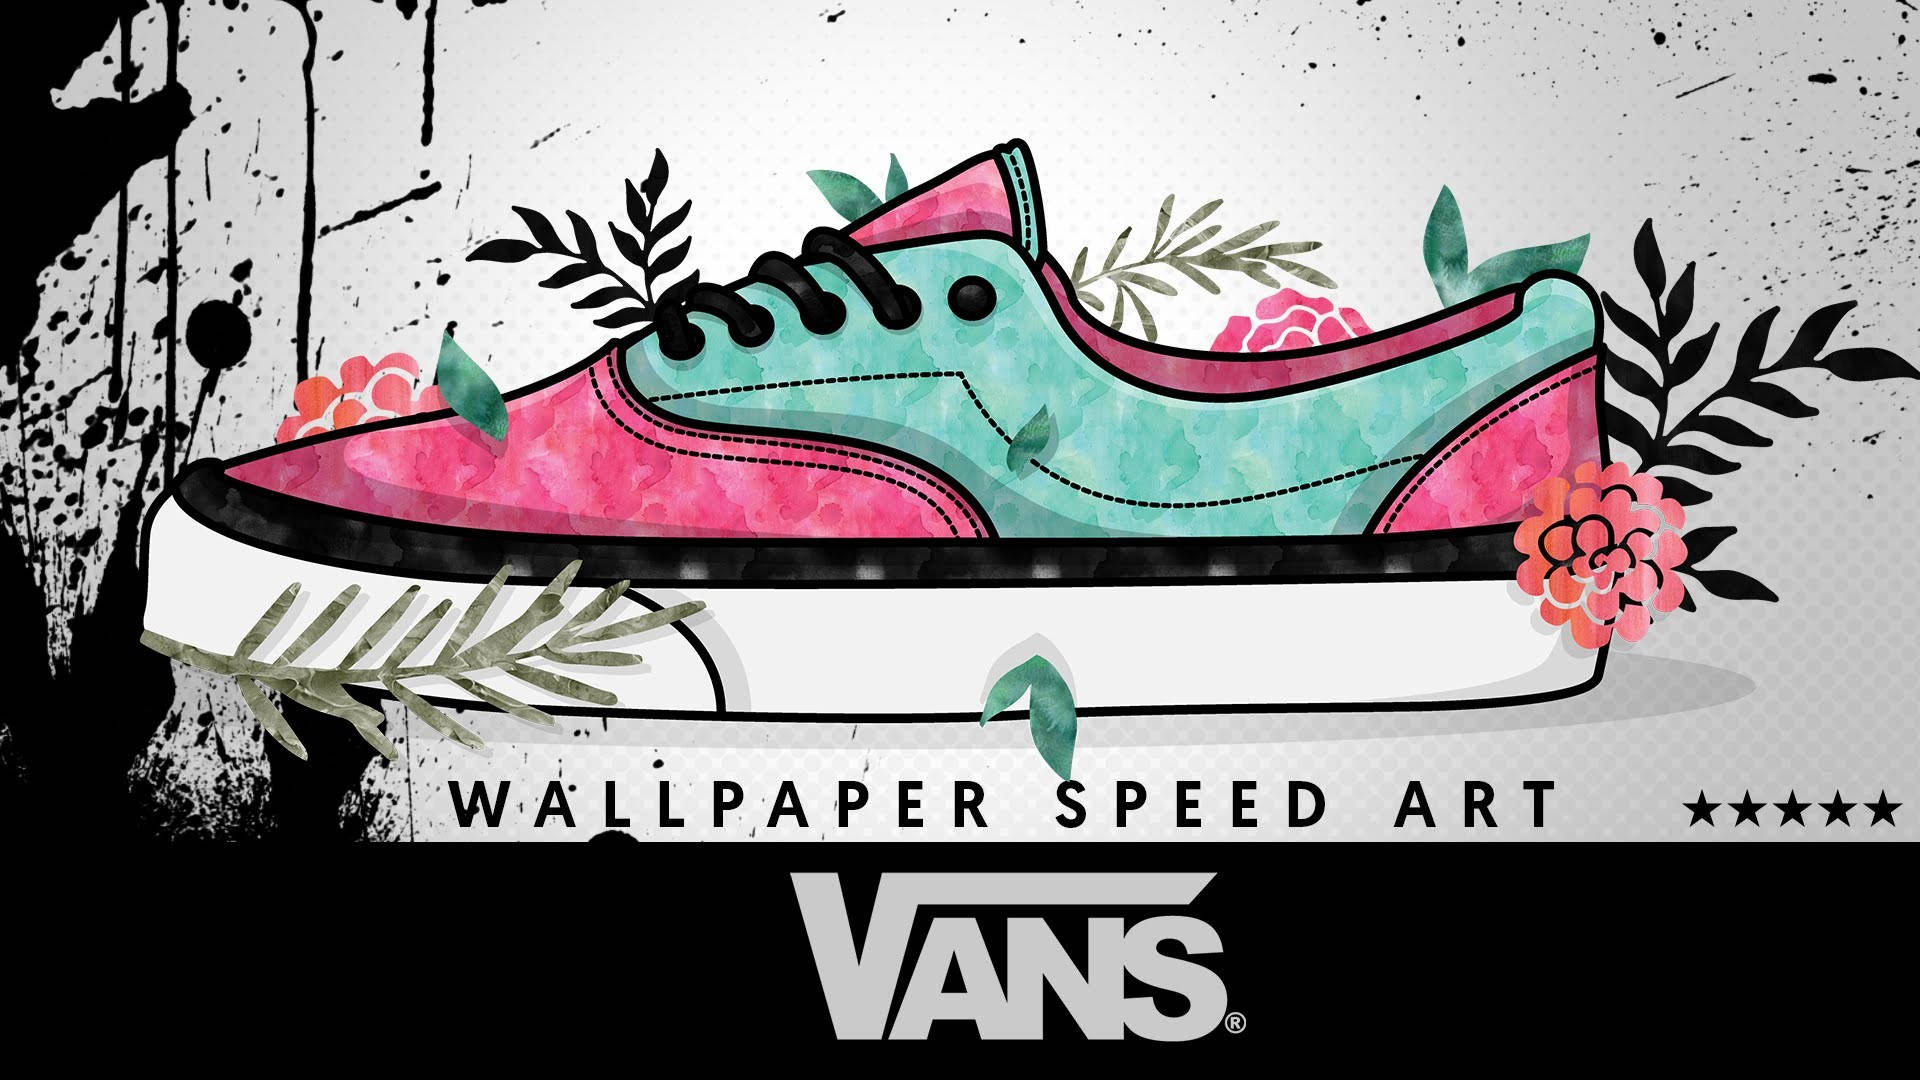 1920x1080 Download Vans Off The Wall Speed Art Wallpaper